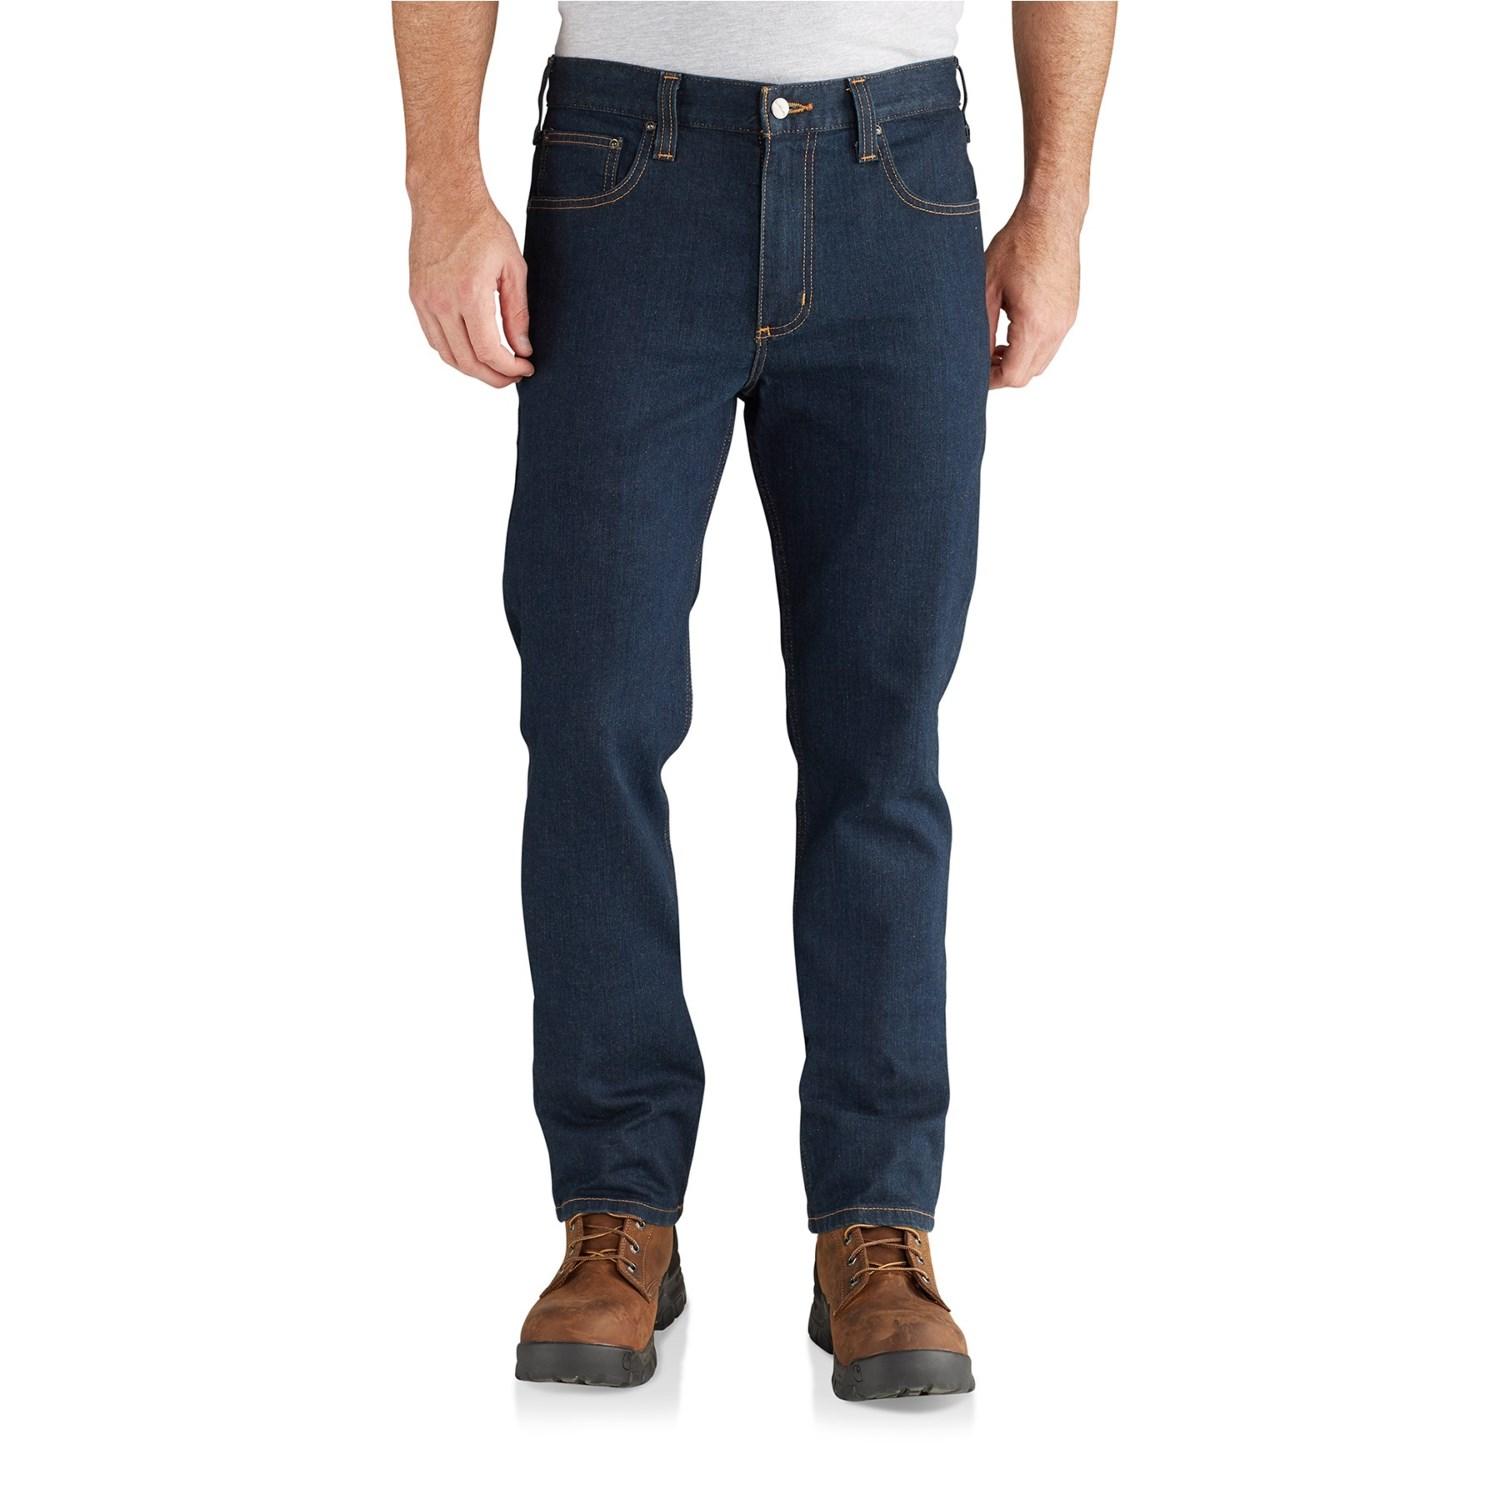 Carhartt Denim 102807 Rugged Flex(r) Jeans in Blue for Men - Save 38% ...